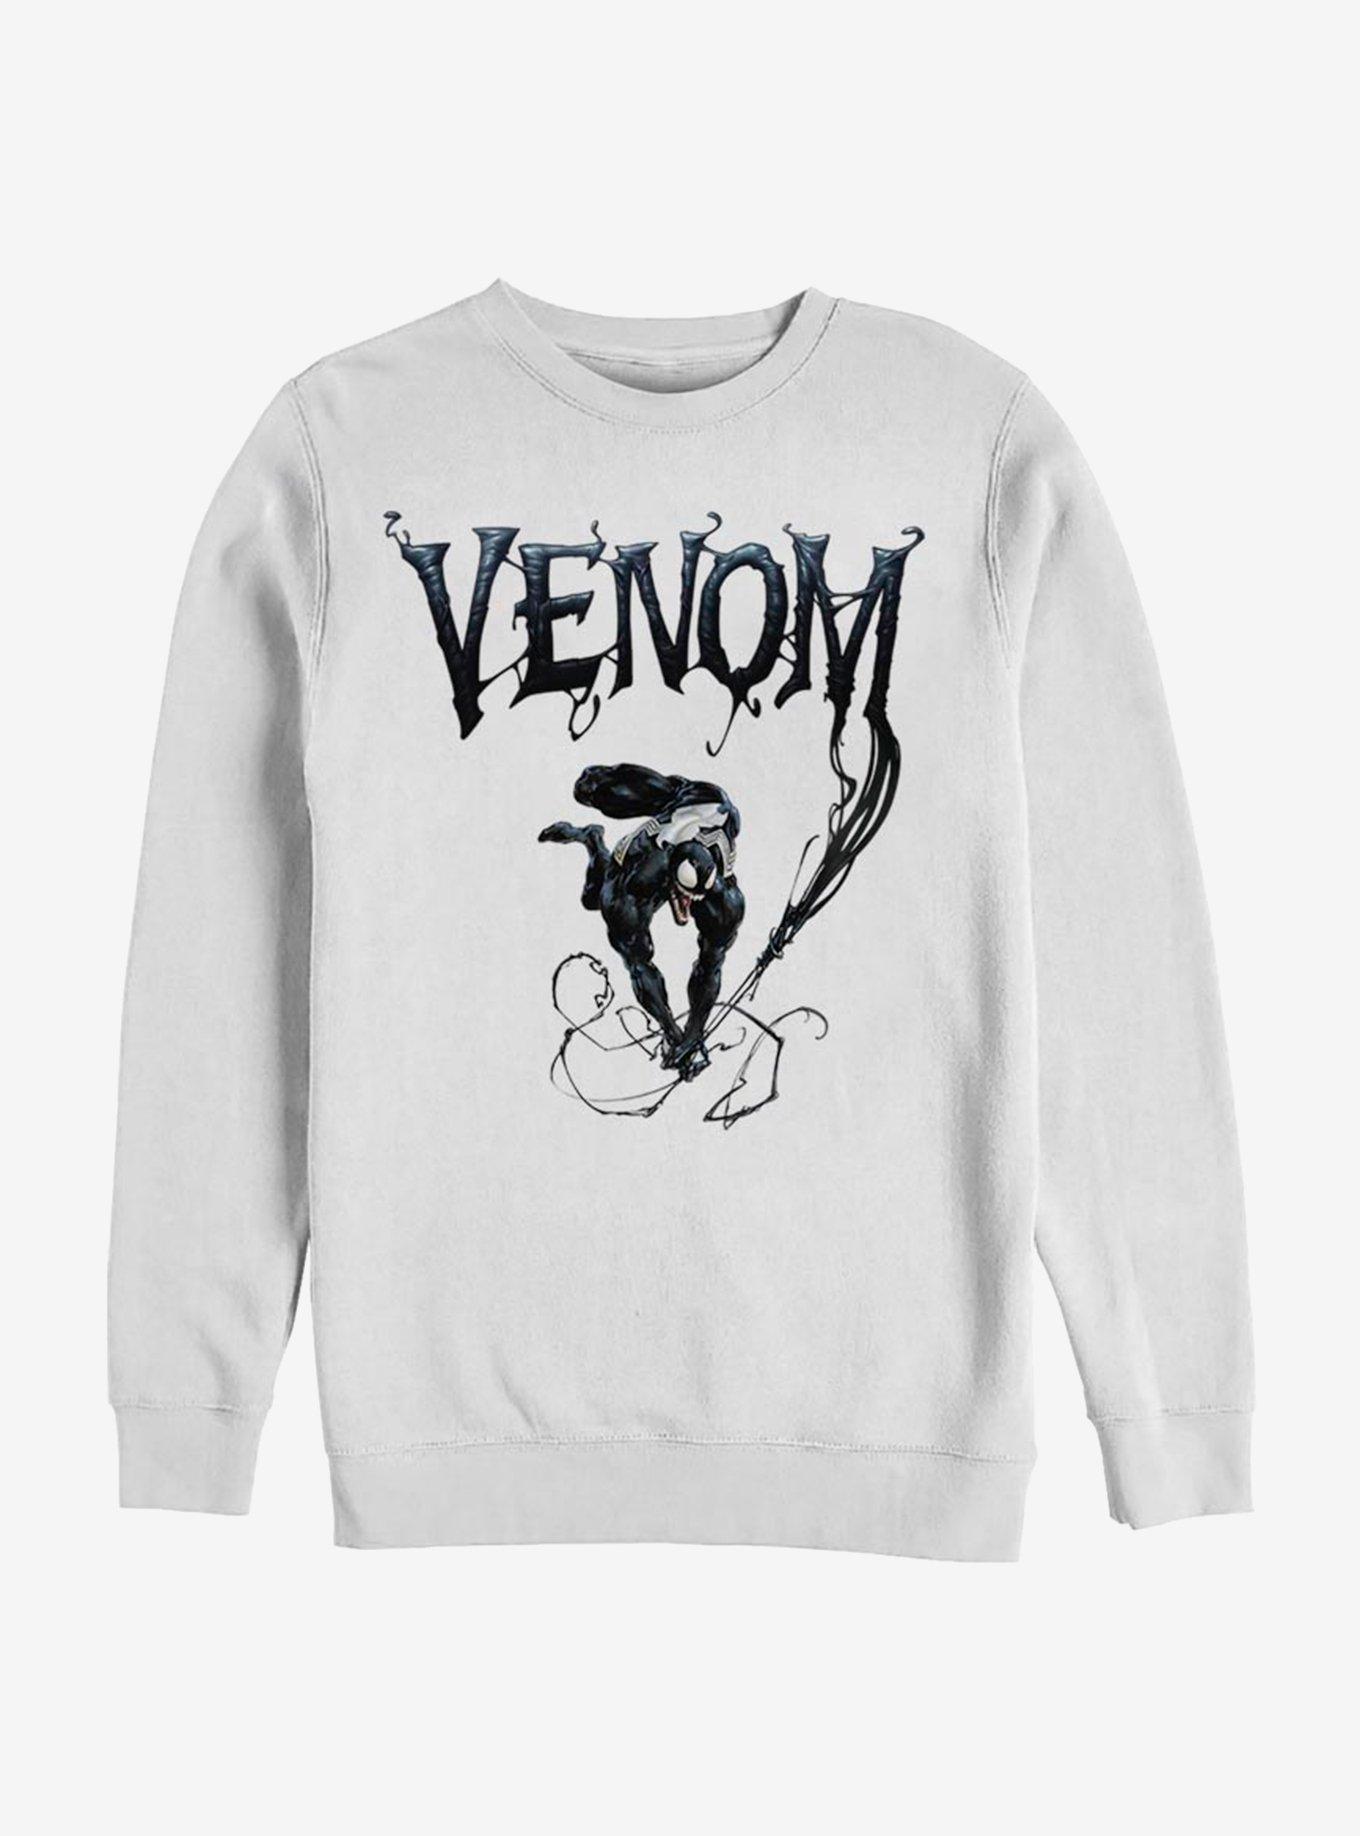 Marvel Venom Symbiote Title Sweatshirt, WHITE, hi-res